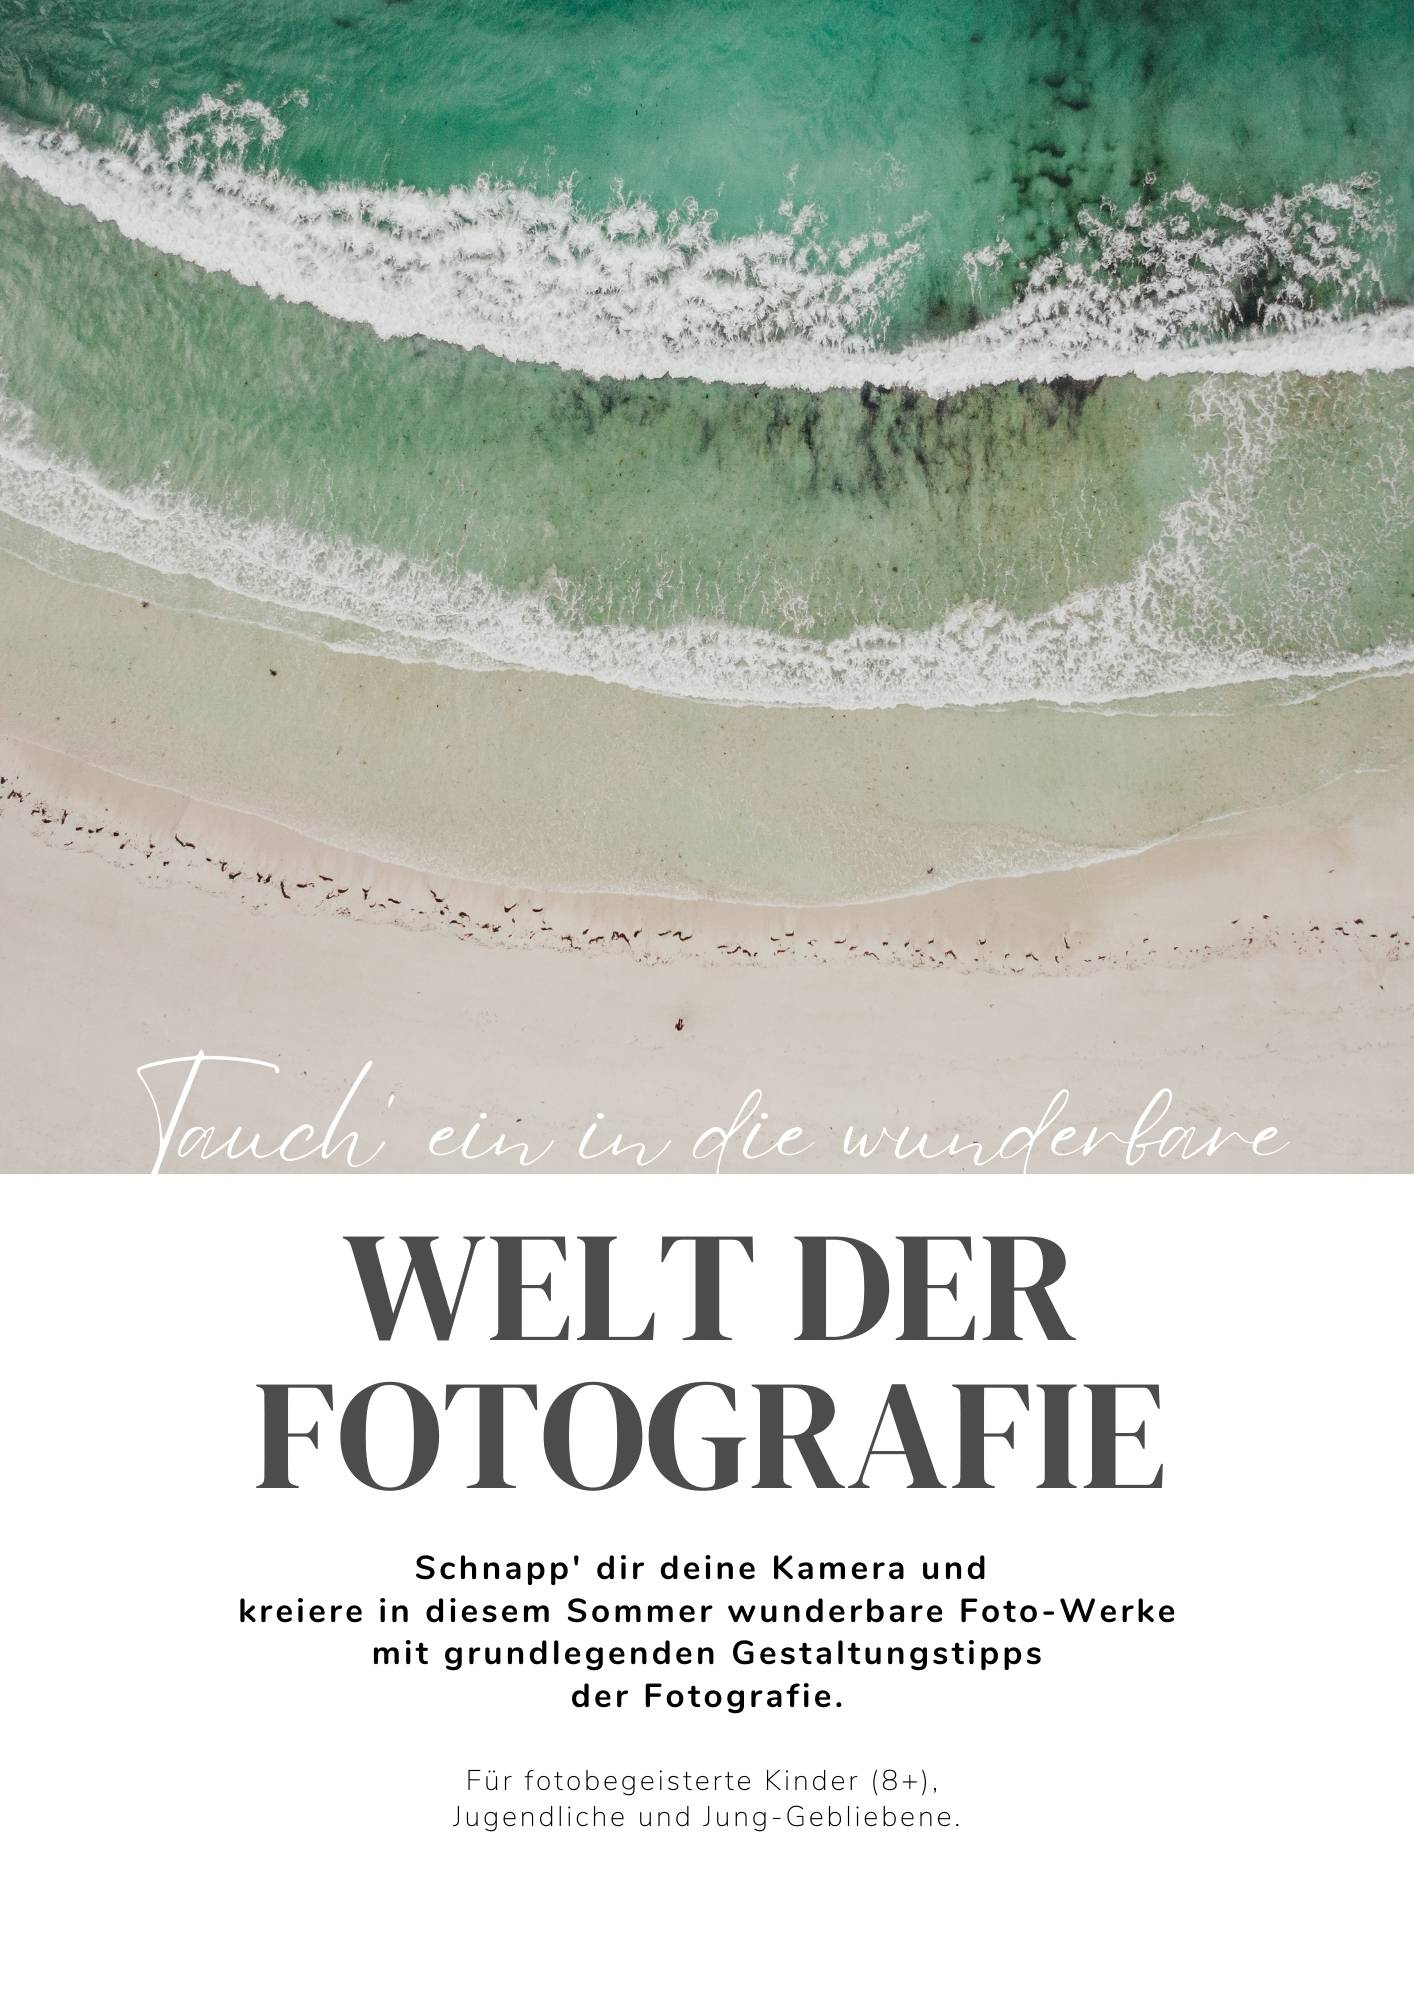 Sommer-Foto-Challenge-Daniela-Führer-Fotografin-Gestaltungstipps-Gestaltungsregeln-Gestaltungsmittel-Fotografie-Fotografieren-lernen